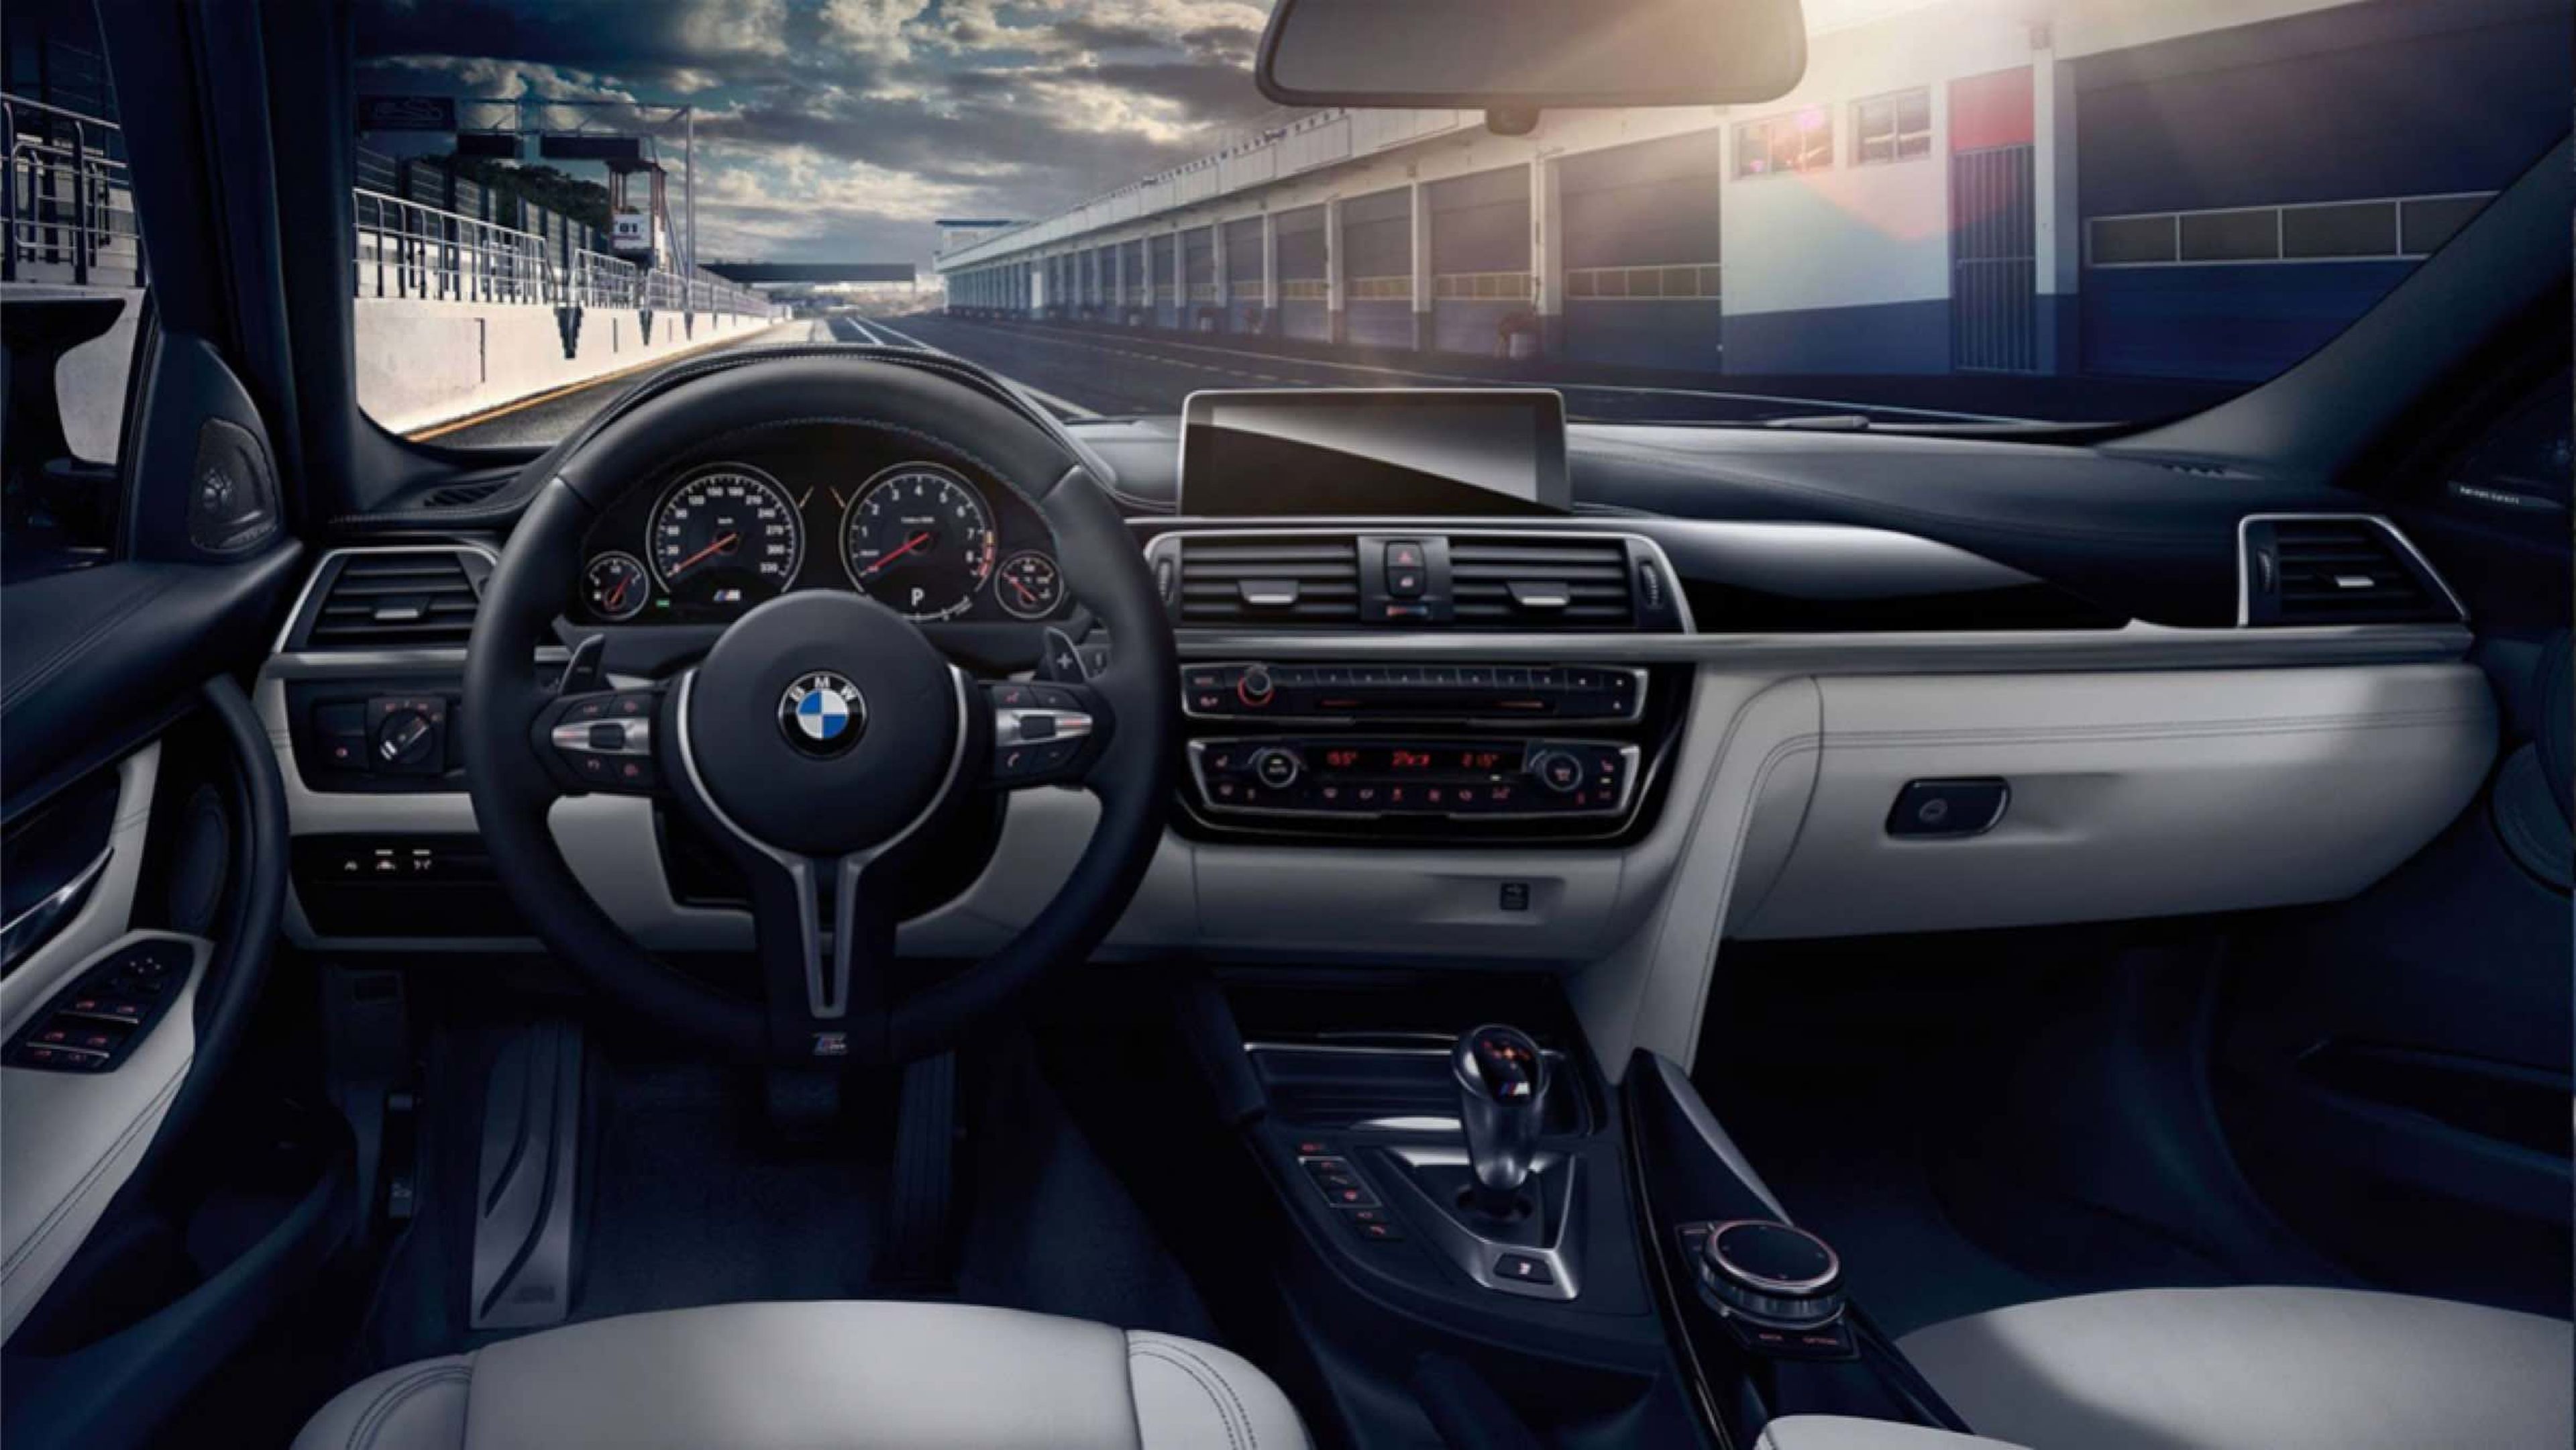 BMW M3 2017 interior